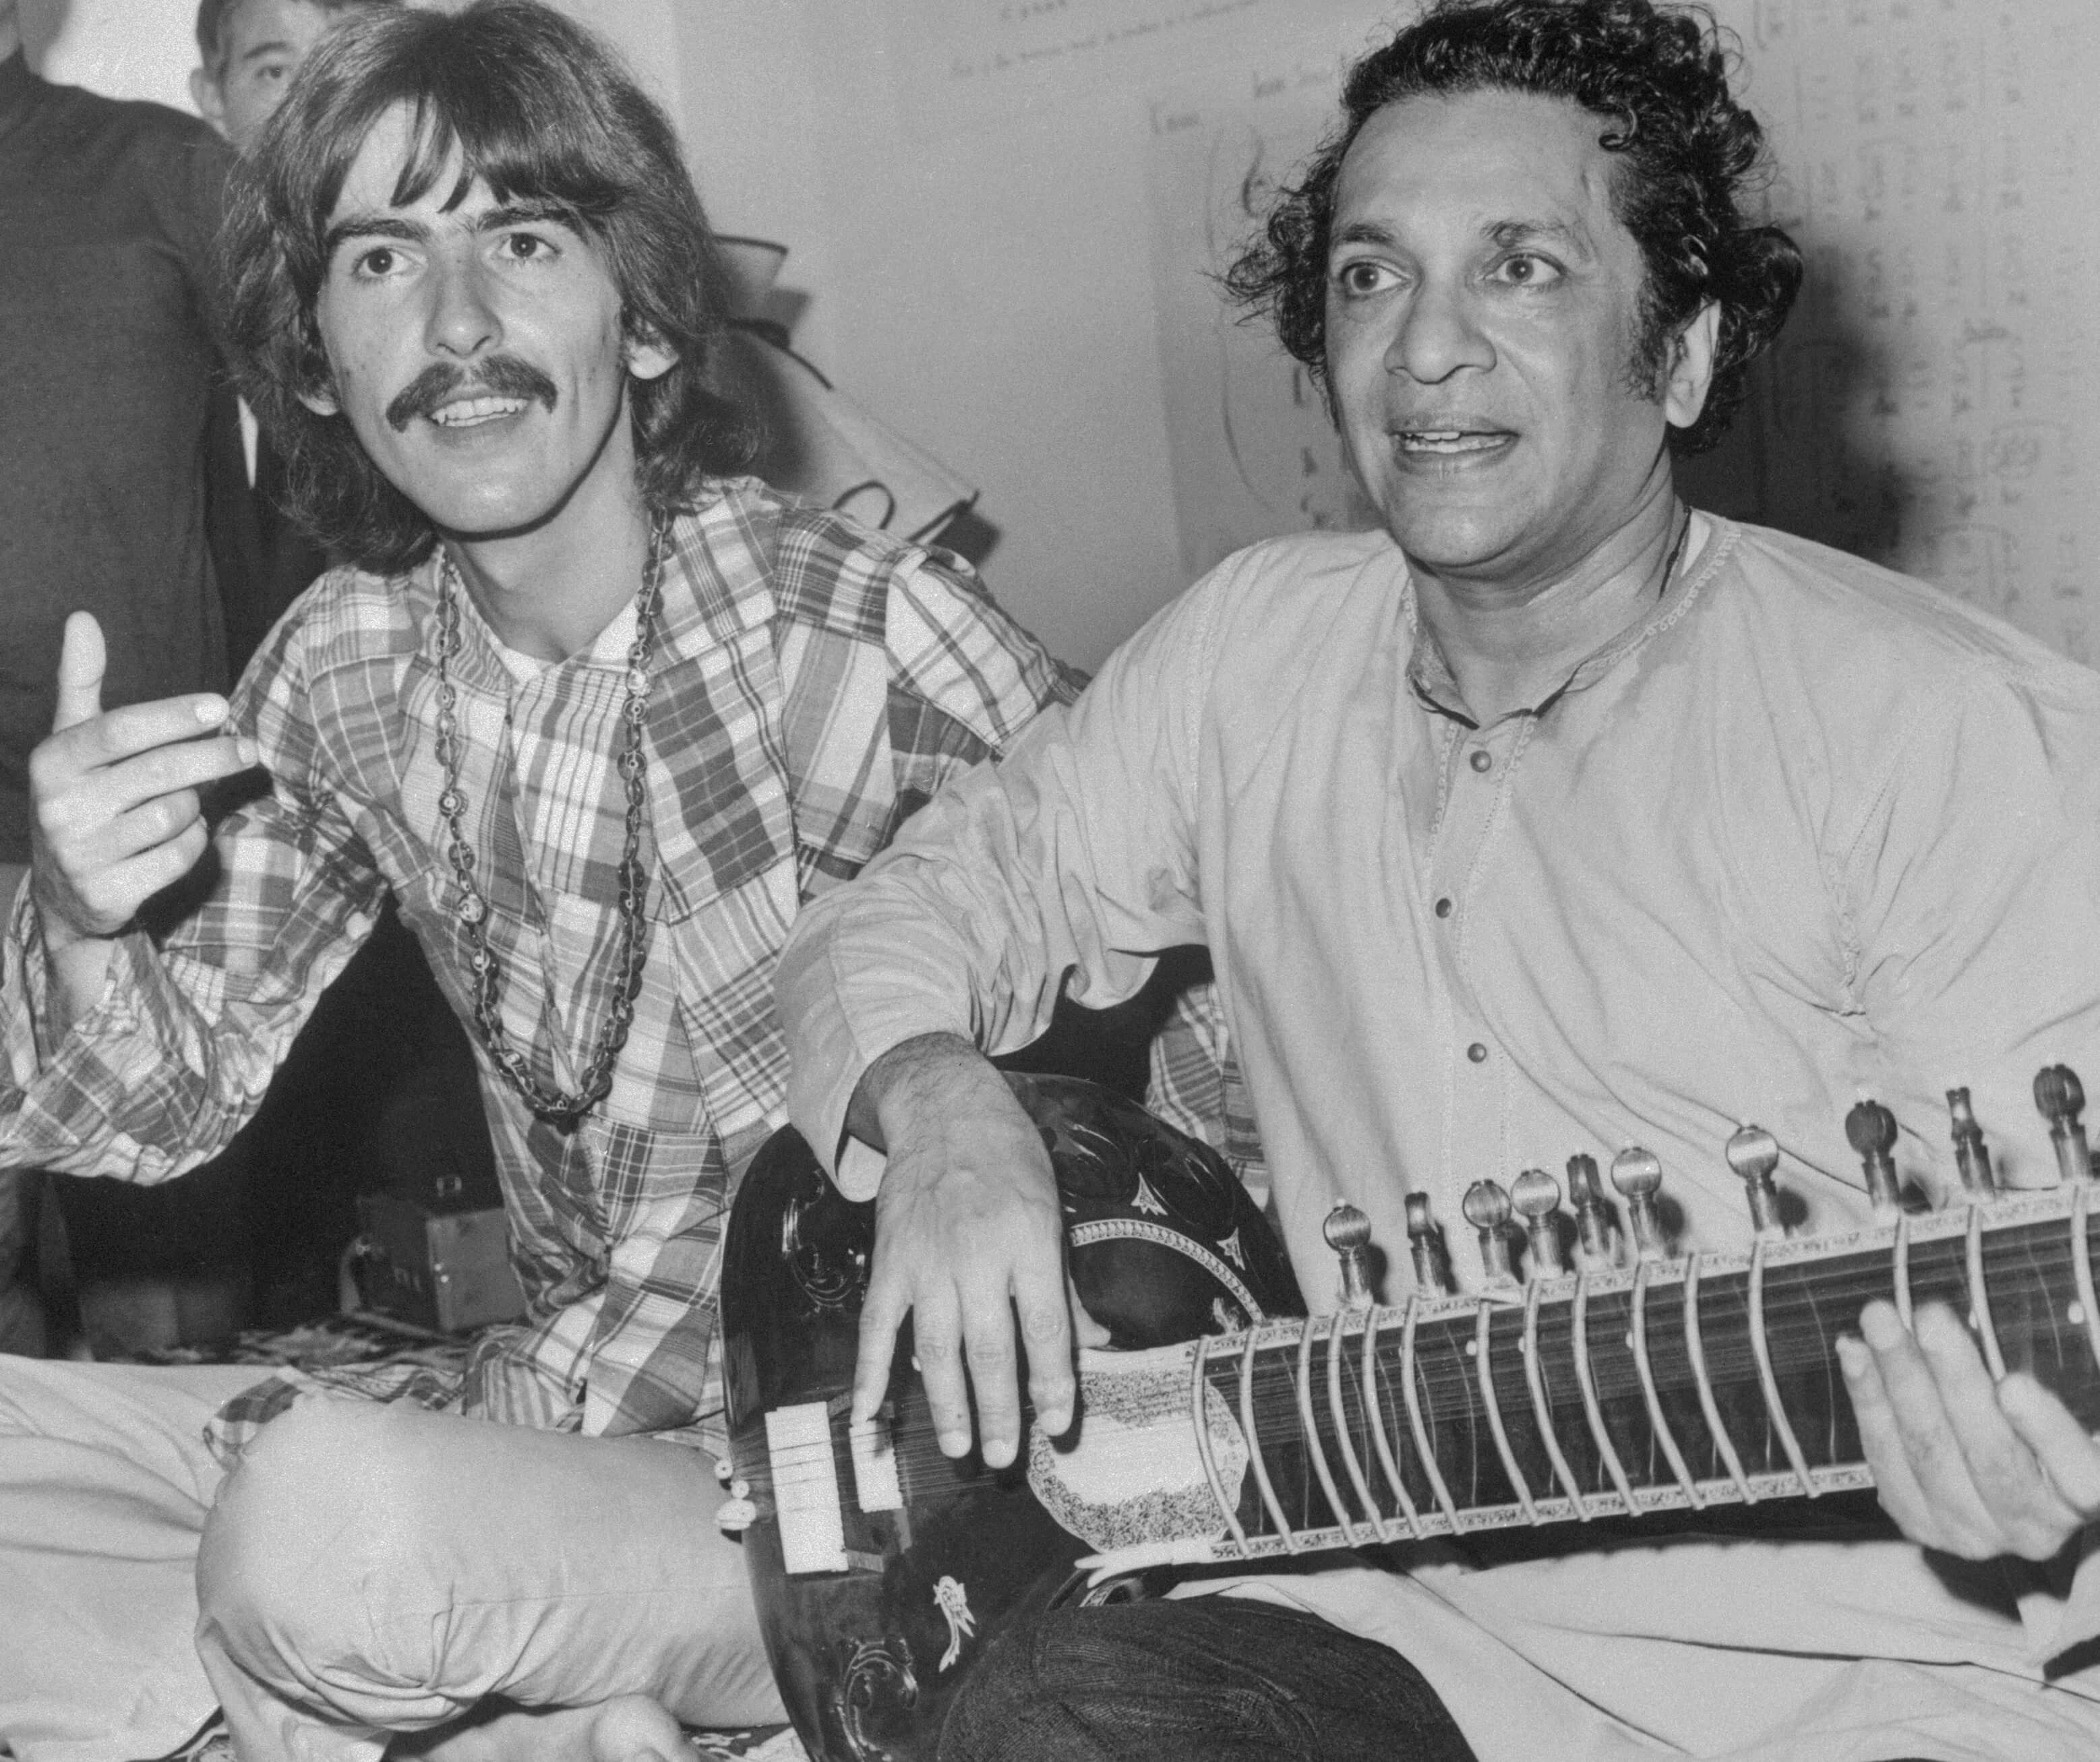 The Beatles' George Harrison next to Ravi Shankar holding a sitar